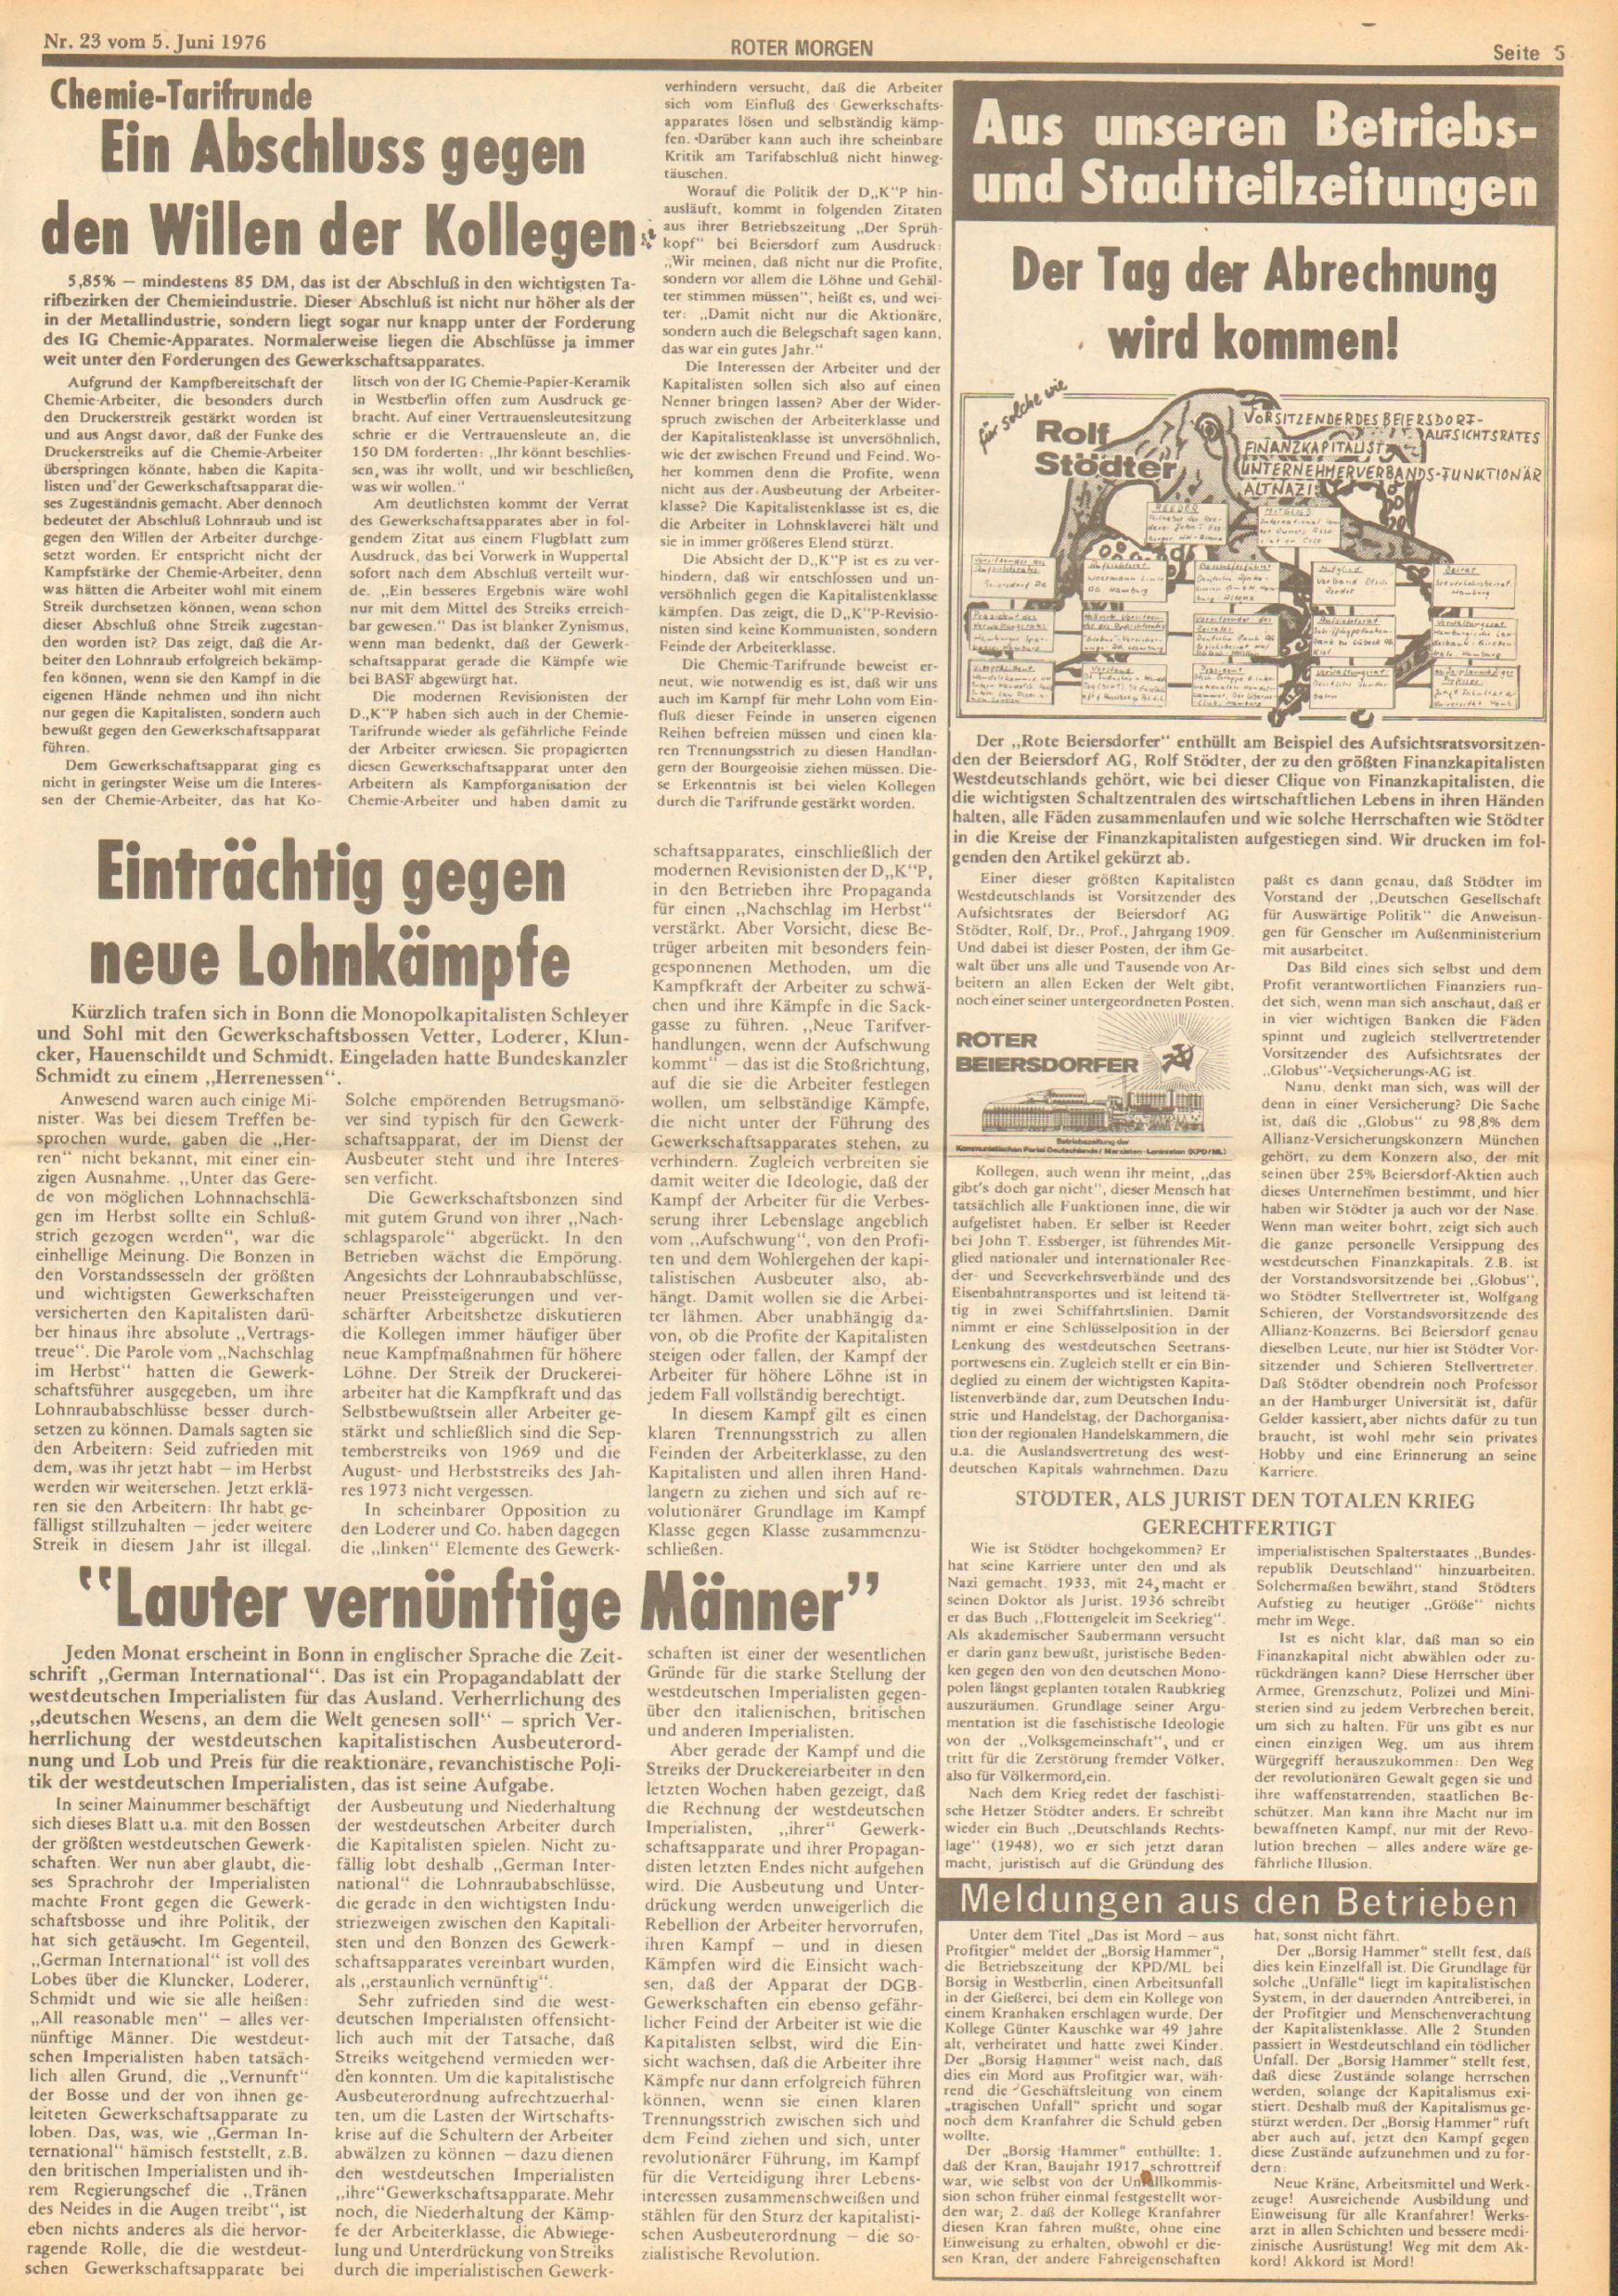 Roter Morgen, 10. Jg., 5. Juni 1976, Nr. 23, Seite 5